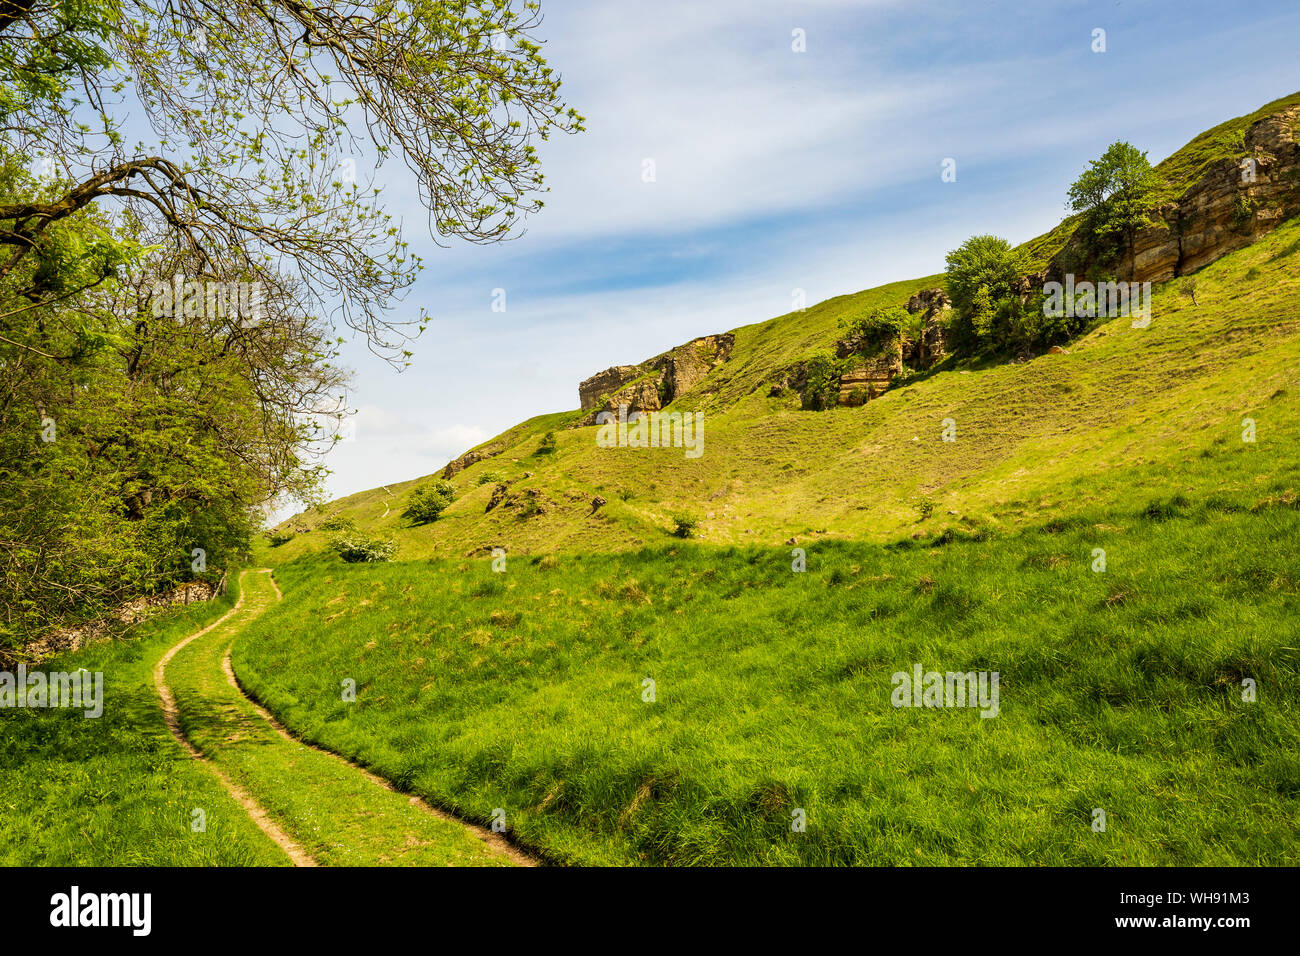 The Cleeve Hill escarpment near Cheltenham Spa, England Stock Photo